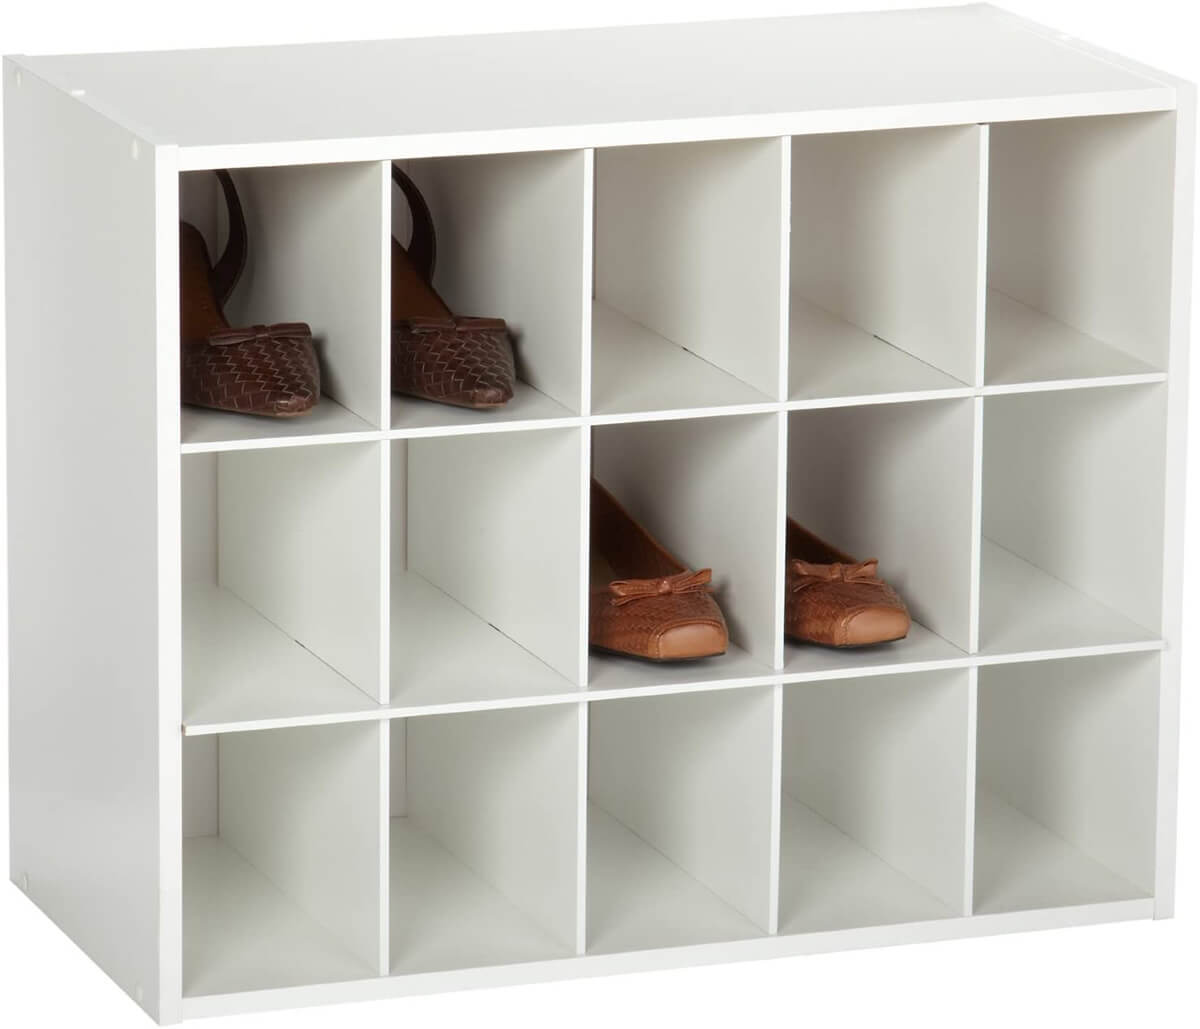 Classic Compartment Organizer #shoeorganizer #storage #shoe #organizer #decorhomeideas